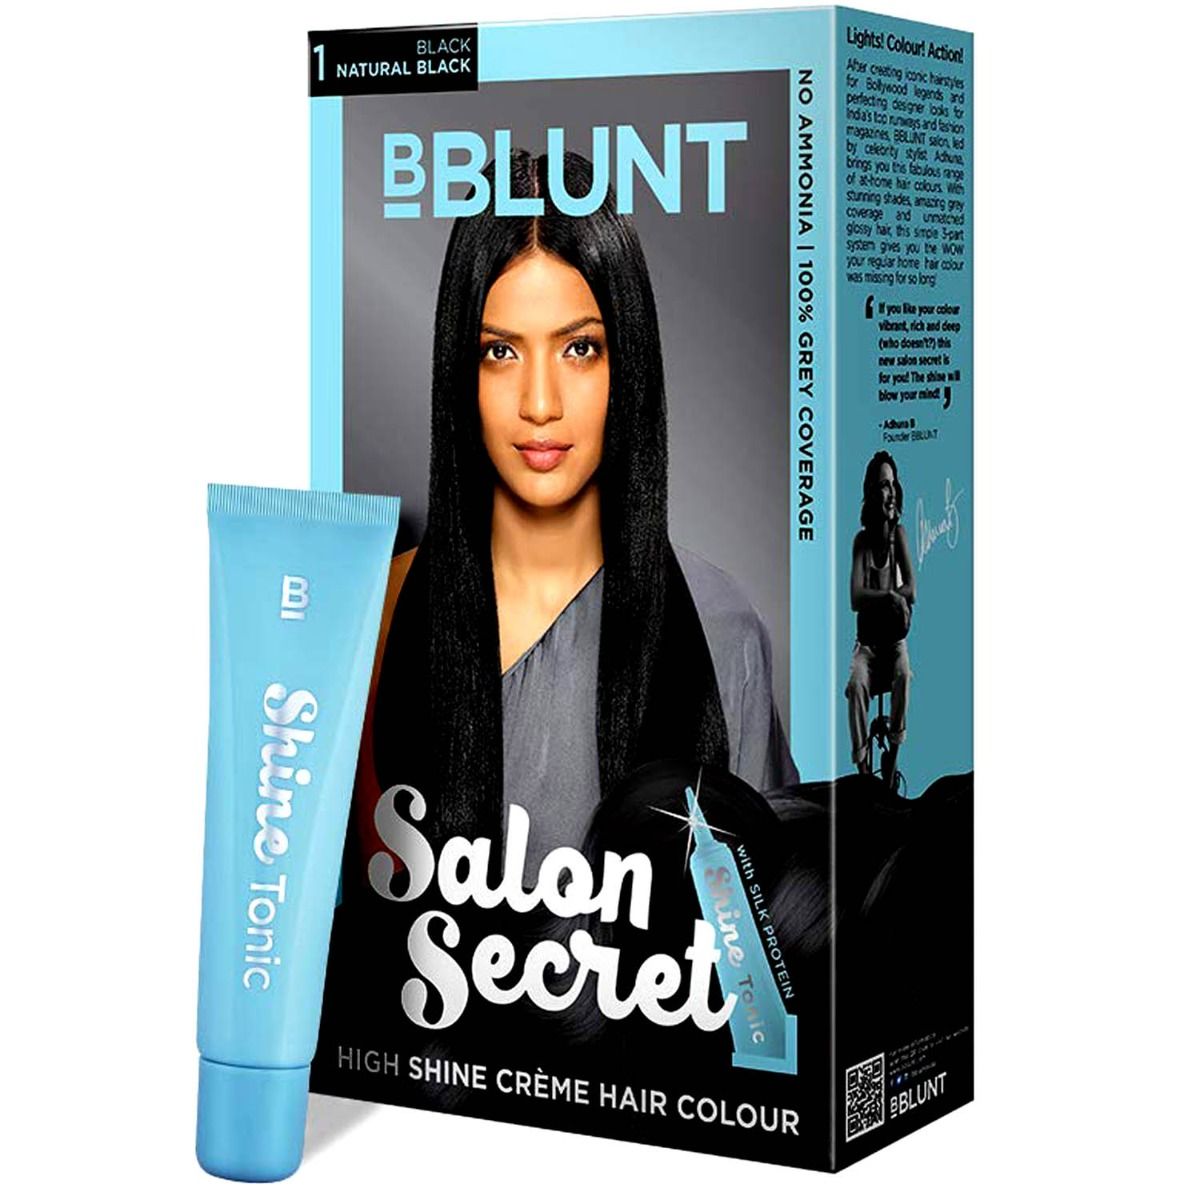 Buy BBLUNT Salon Secret High Shine Creme Hair Colour , Black Natural Black 1, 100 gm with Shine Tonic, 8 ml Online